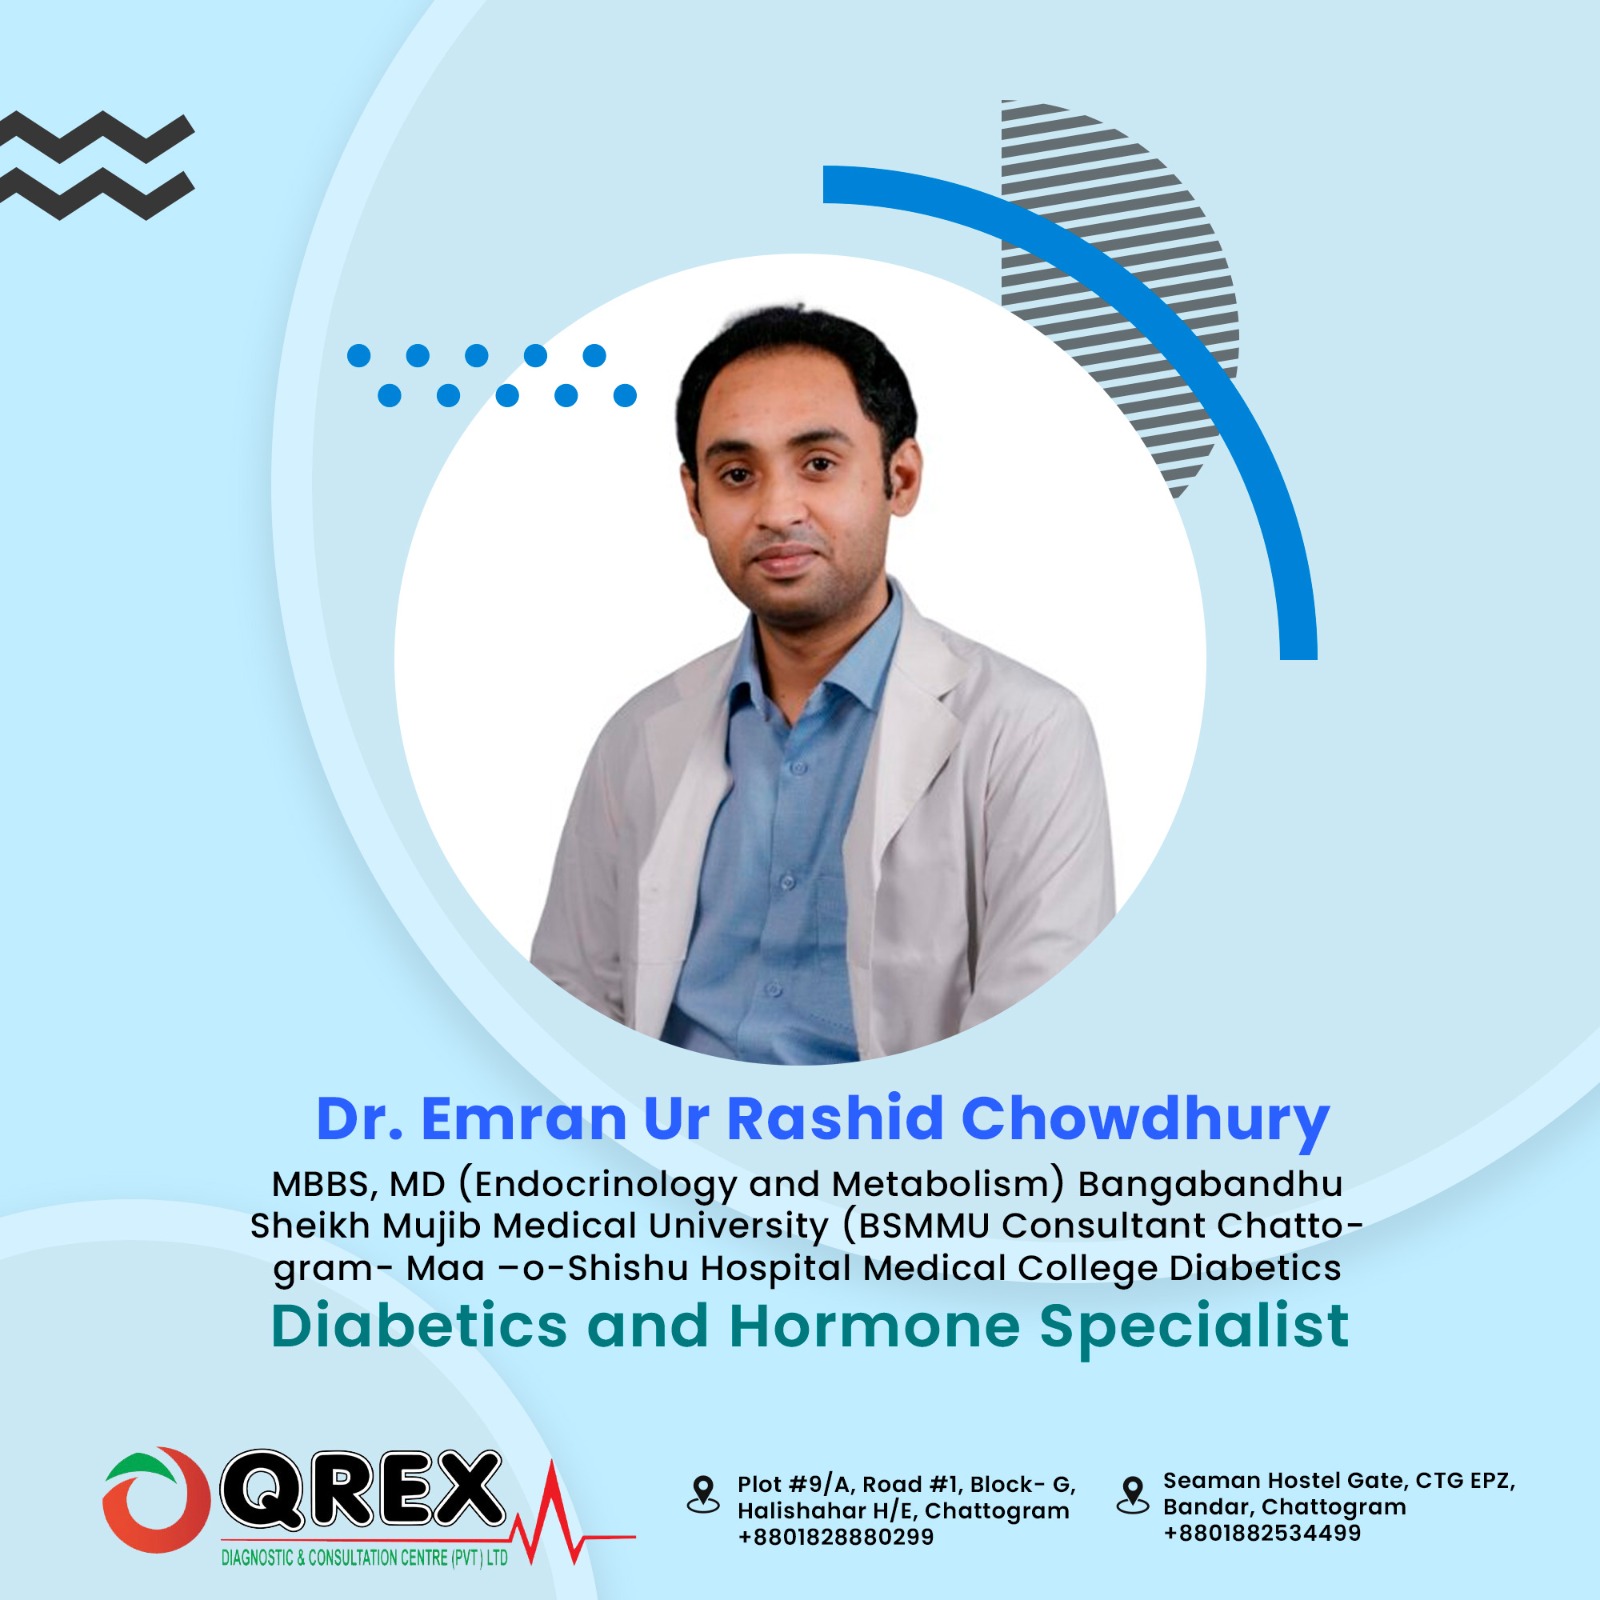 Dr. Emran Ur Rashid Chowdhury